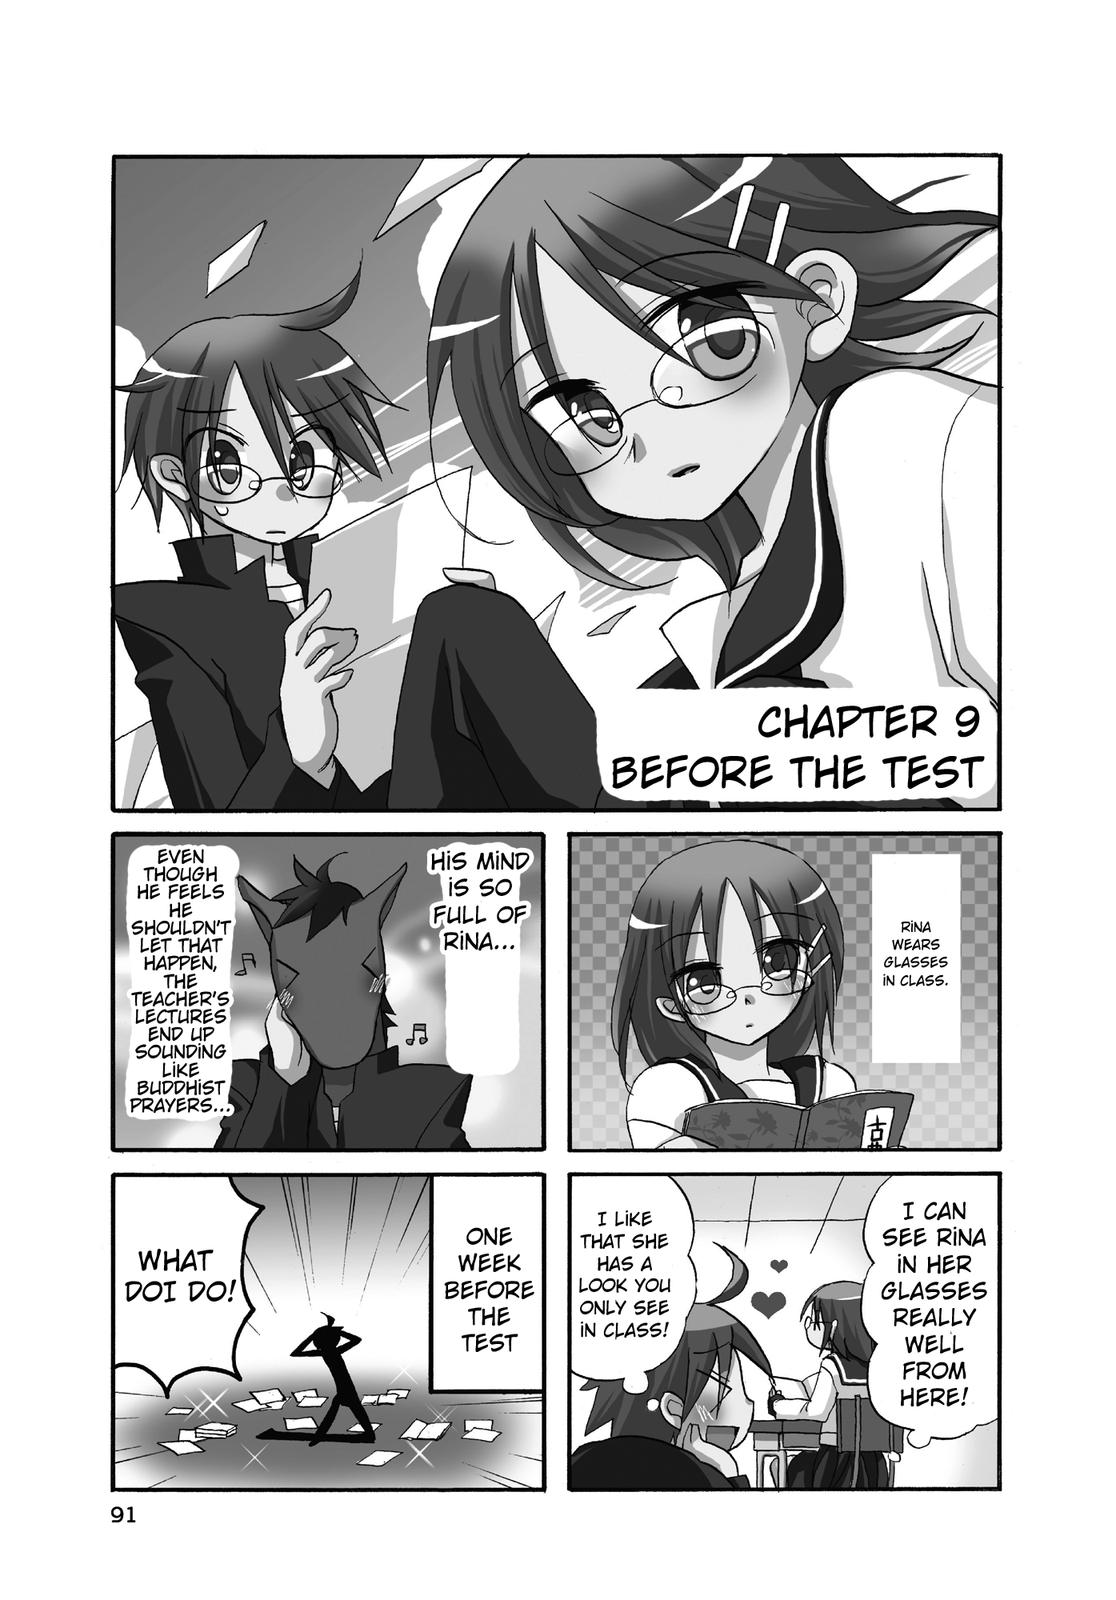 Harukaze Biyori Vol. 1 Ch. 9 Before the Test